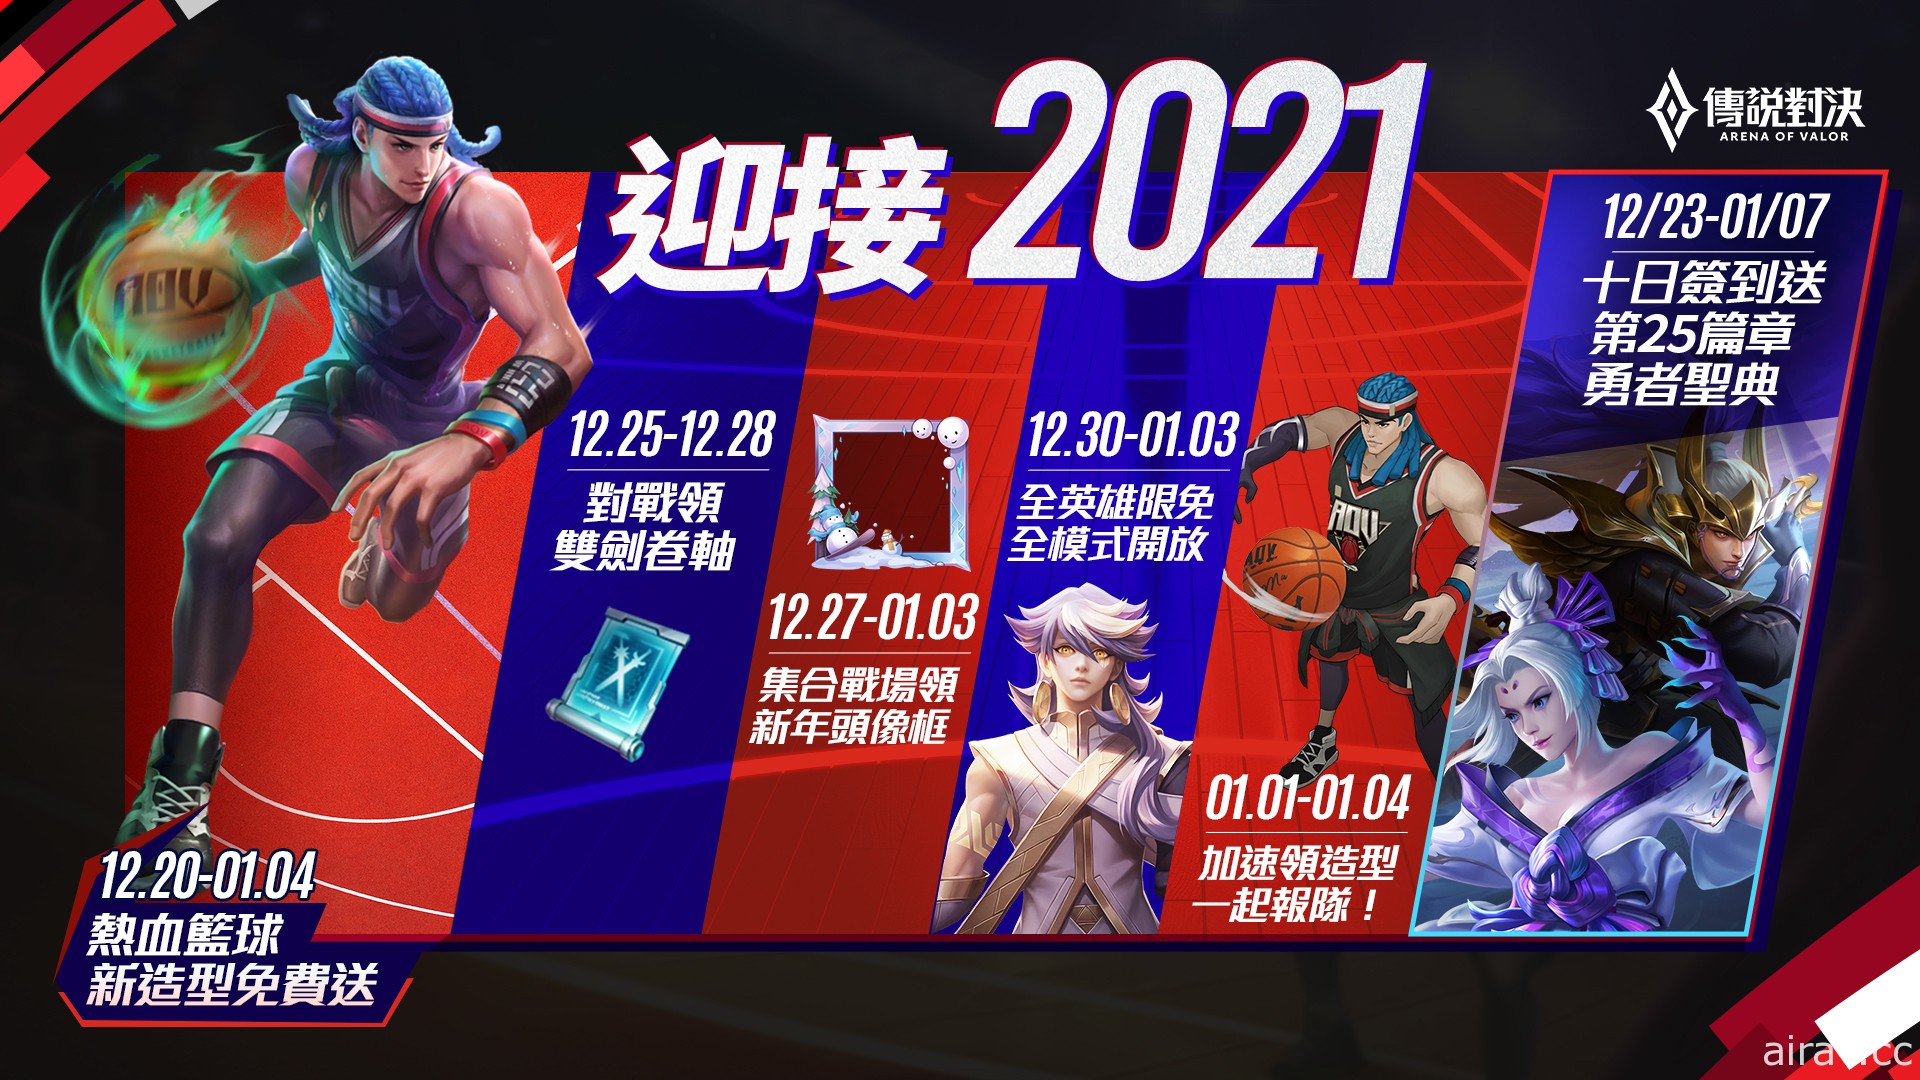 《Garena 传说对决》首波跨年活动上线 邀玩家一同迎接 2021 年到来